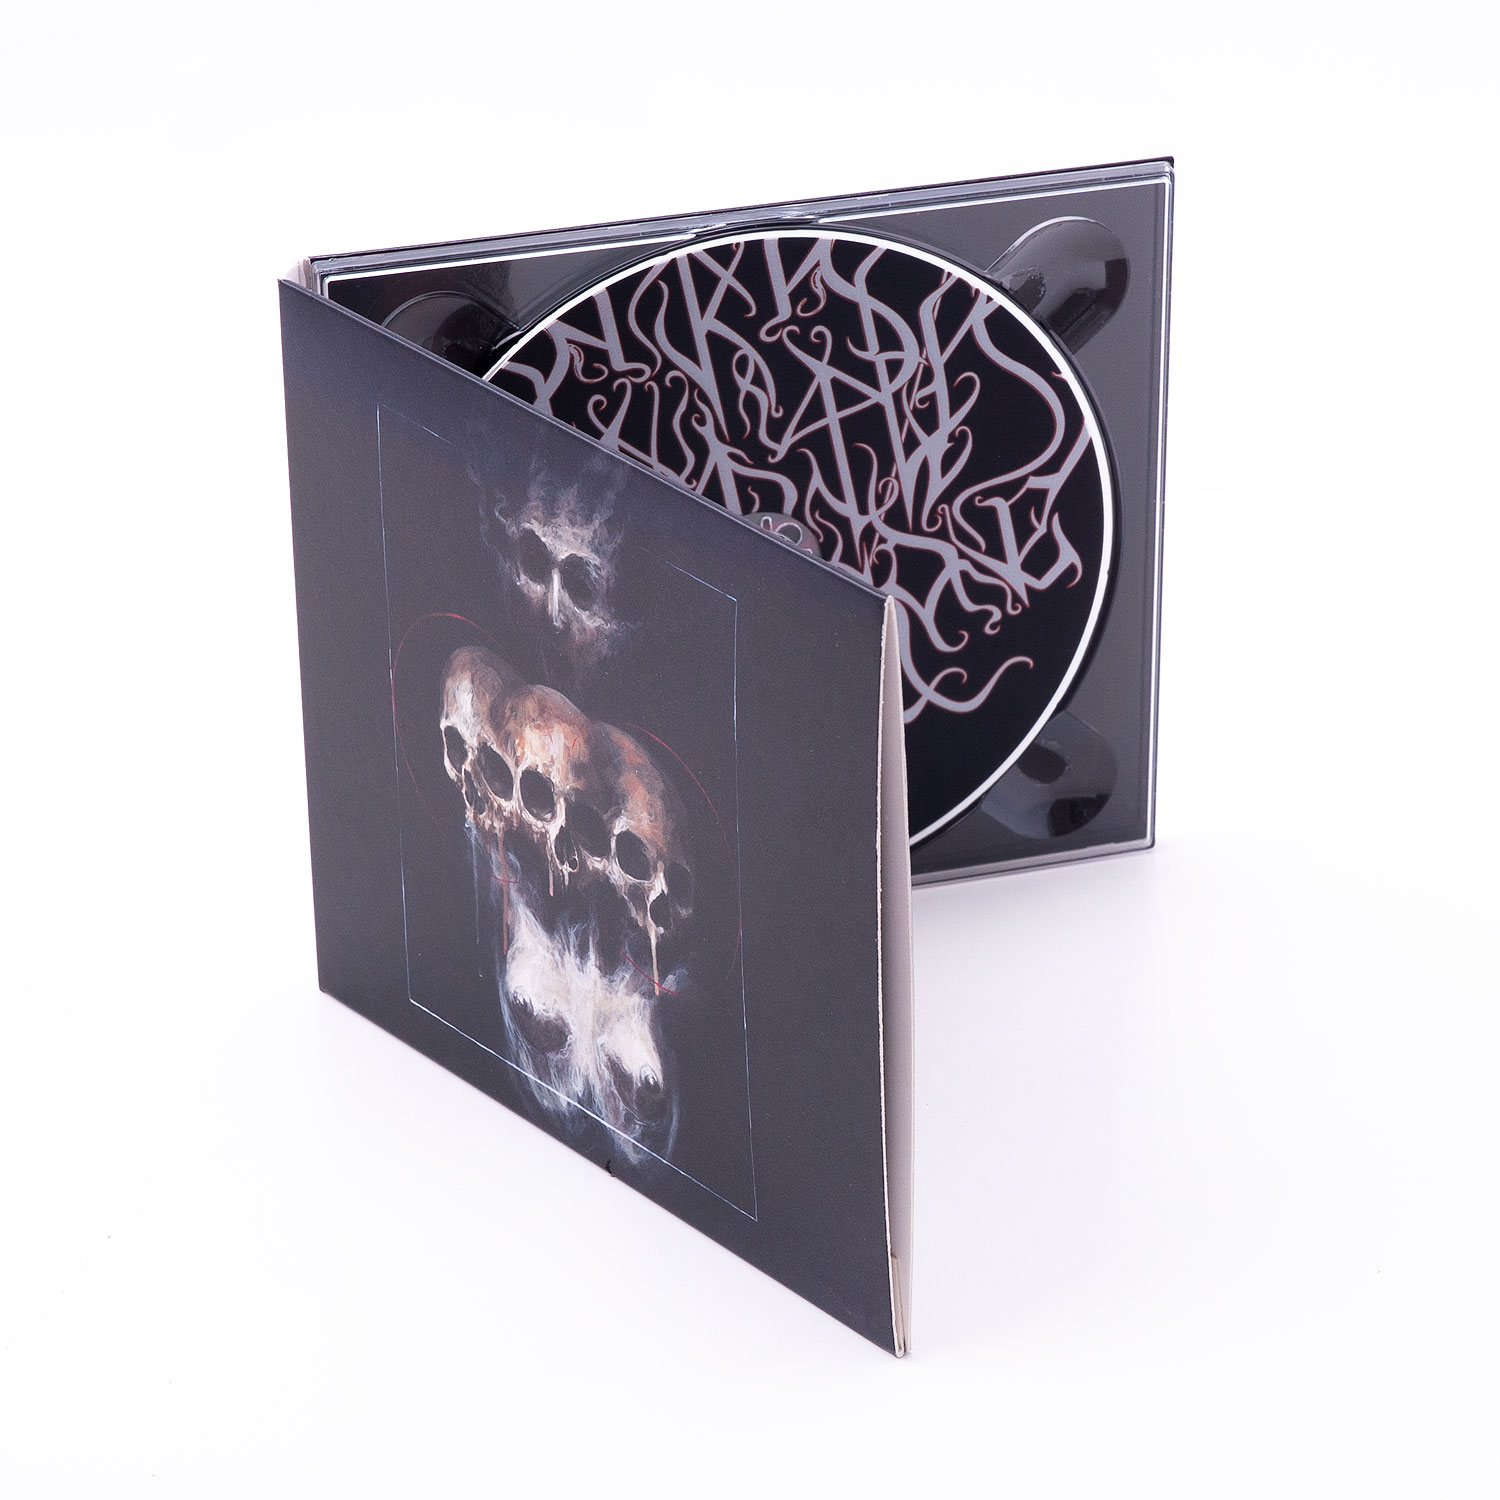 Ars Magna Umbrae – Apotheosis CD – Metal Odyssey